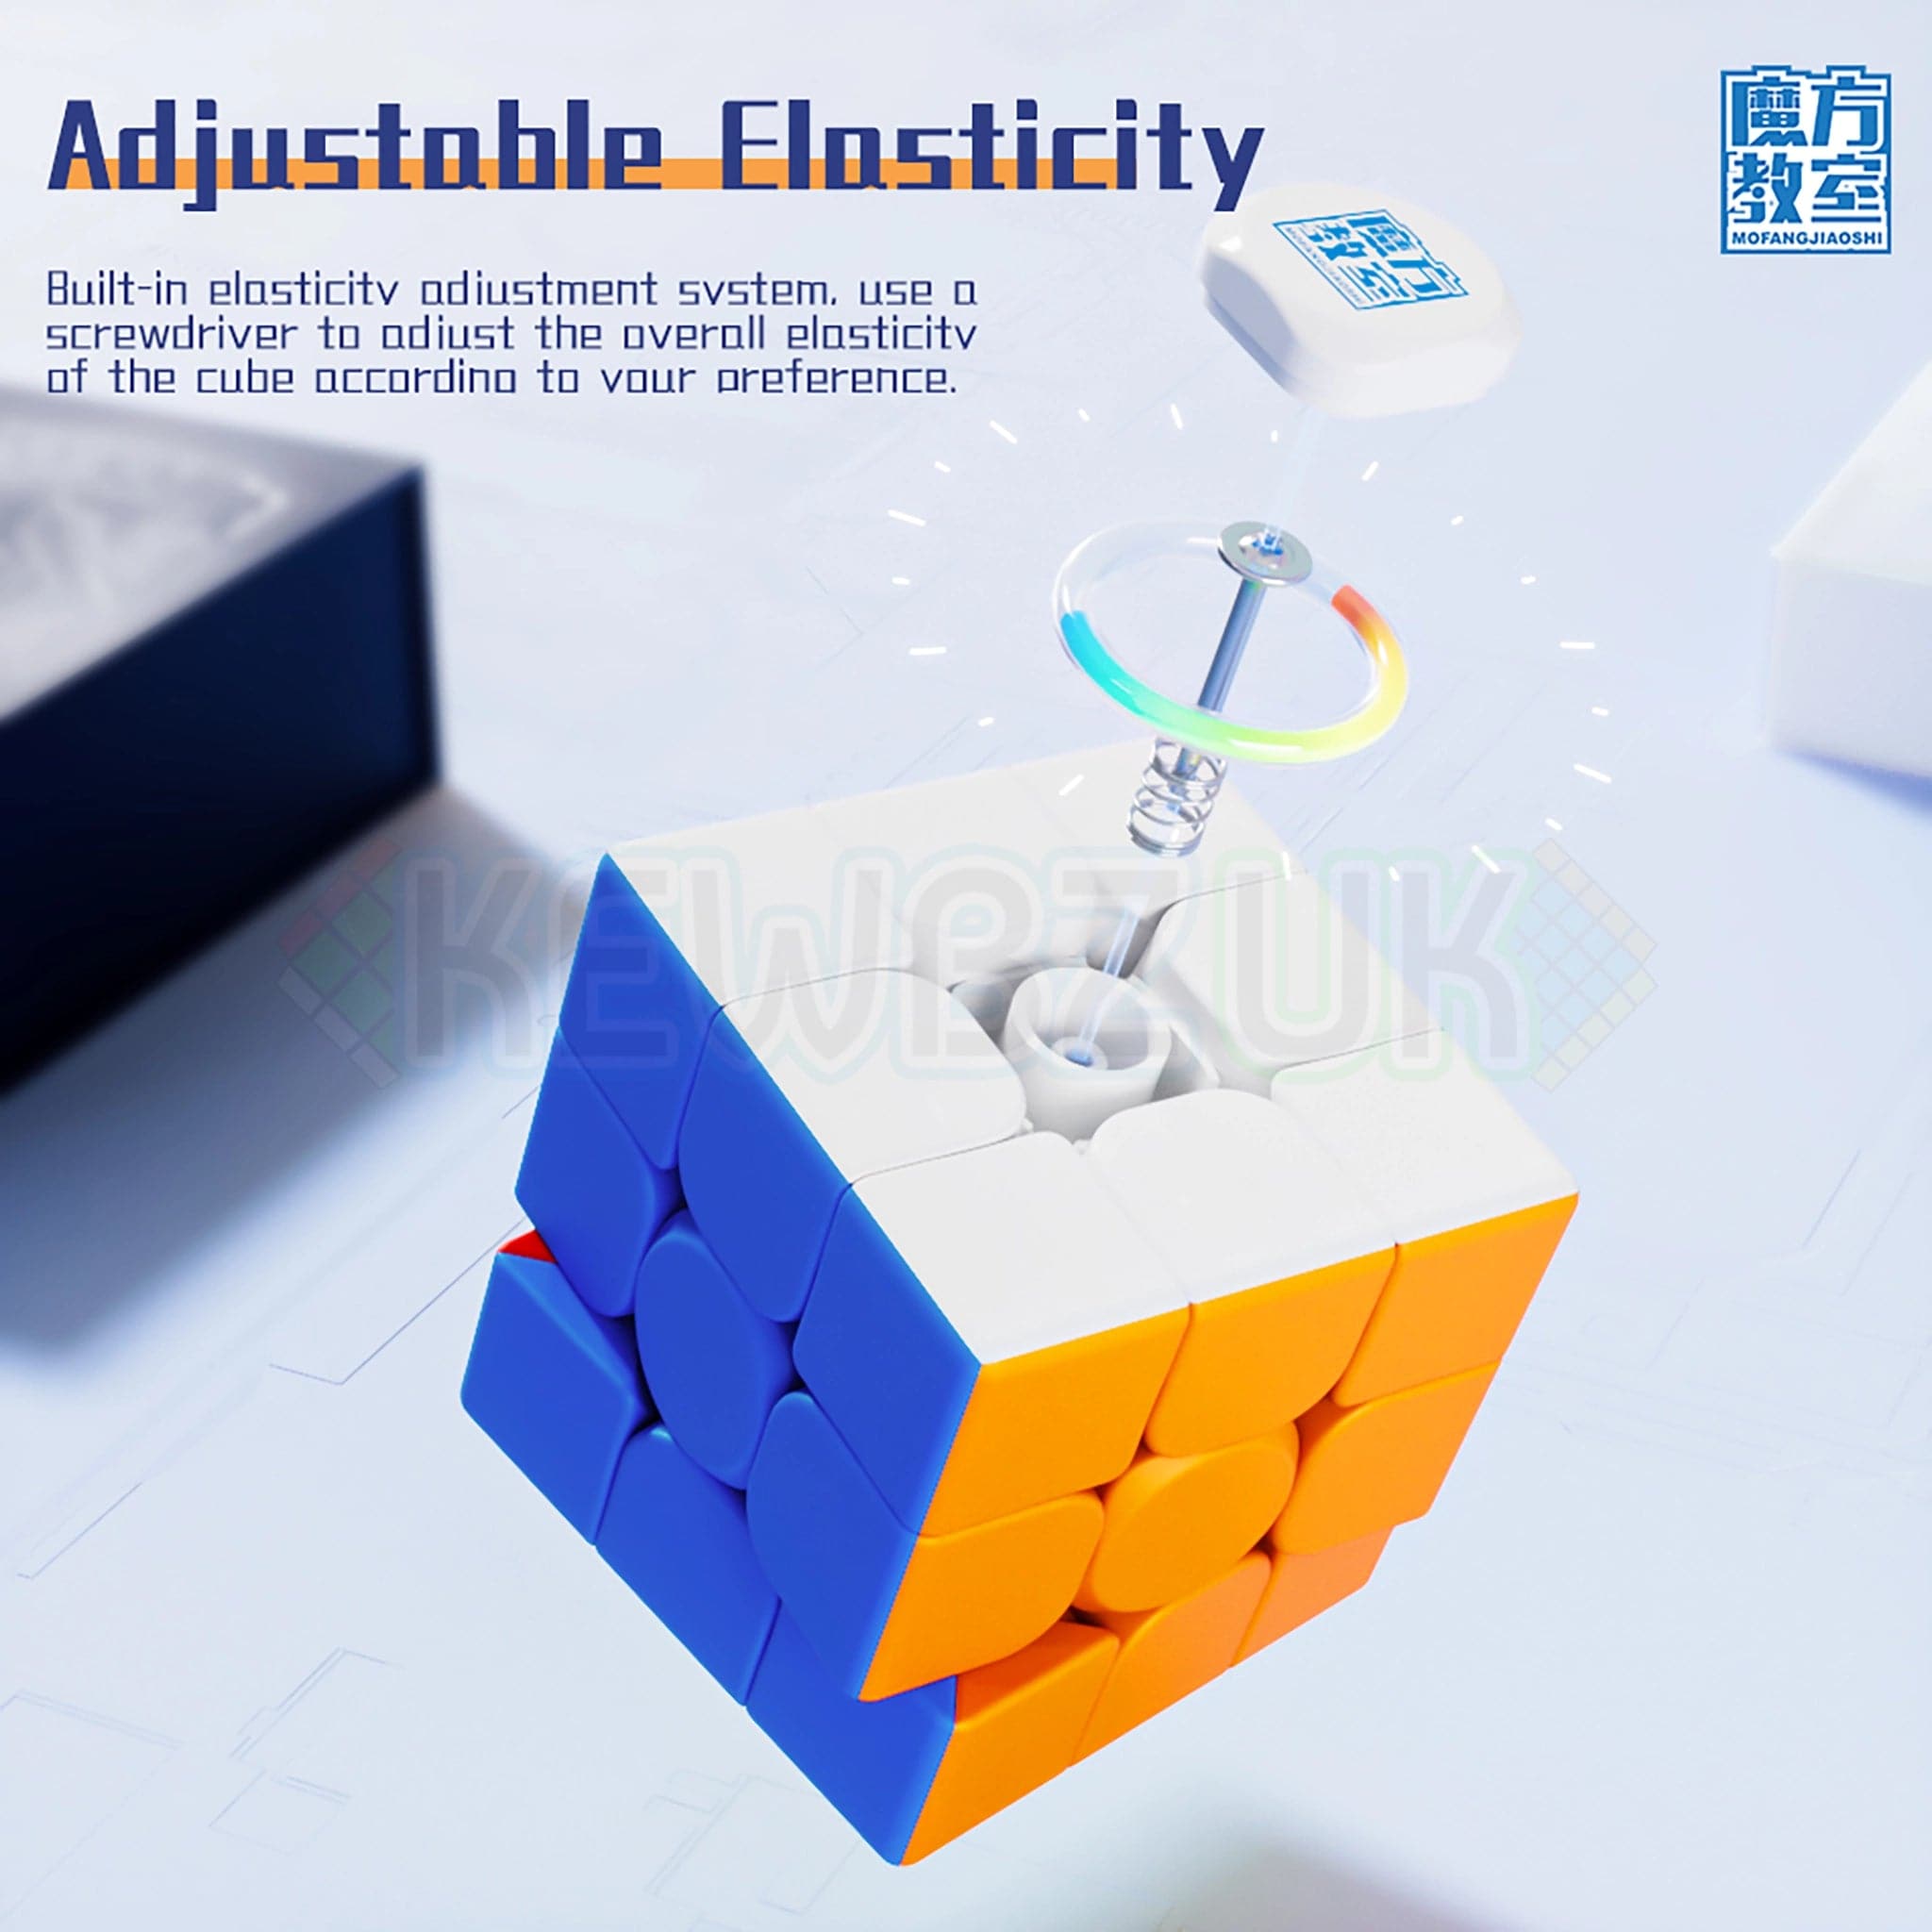 MoYu Meilong 3M 3x3 Magic Cube Magnetic Speed Cube, Adjustable Elasticity